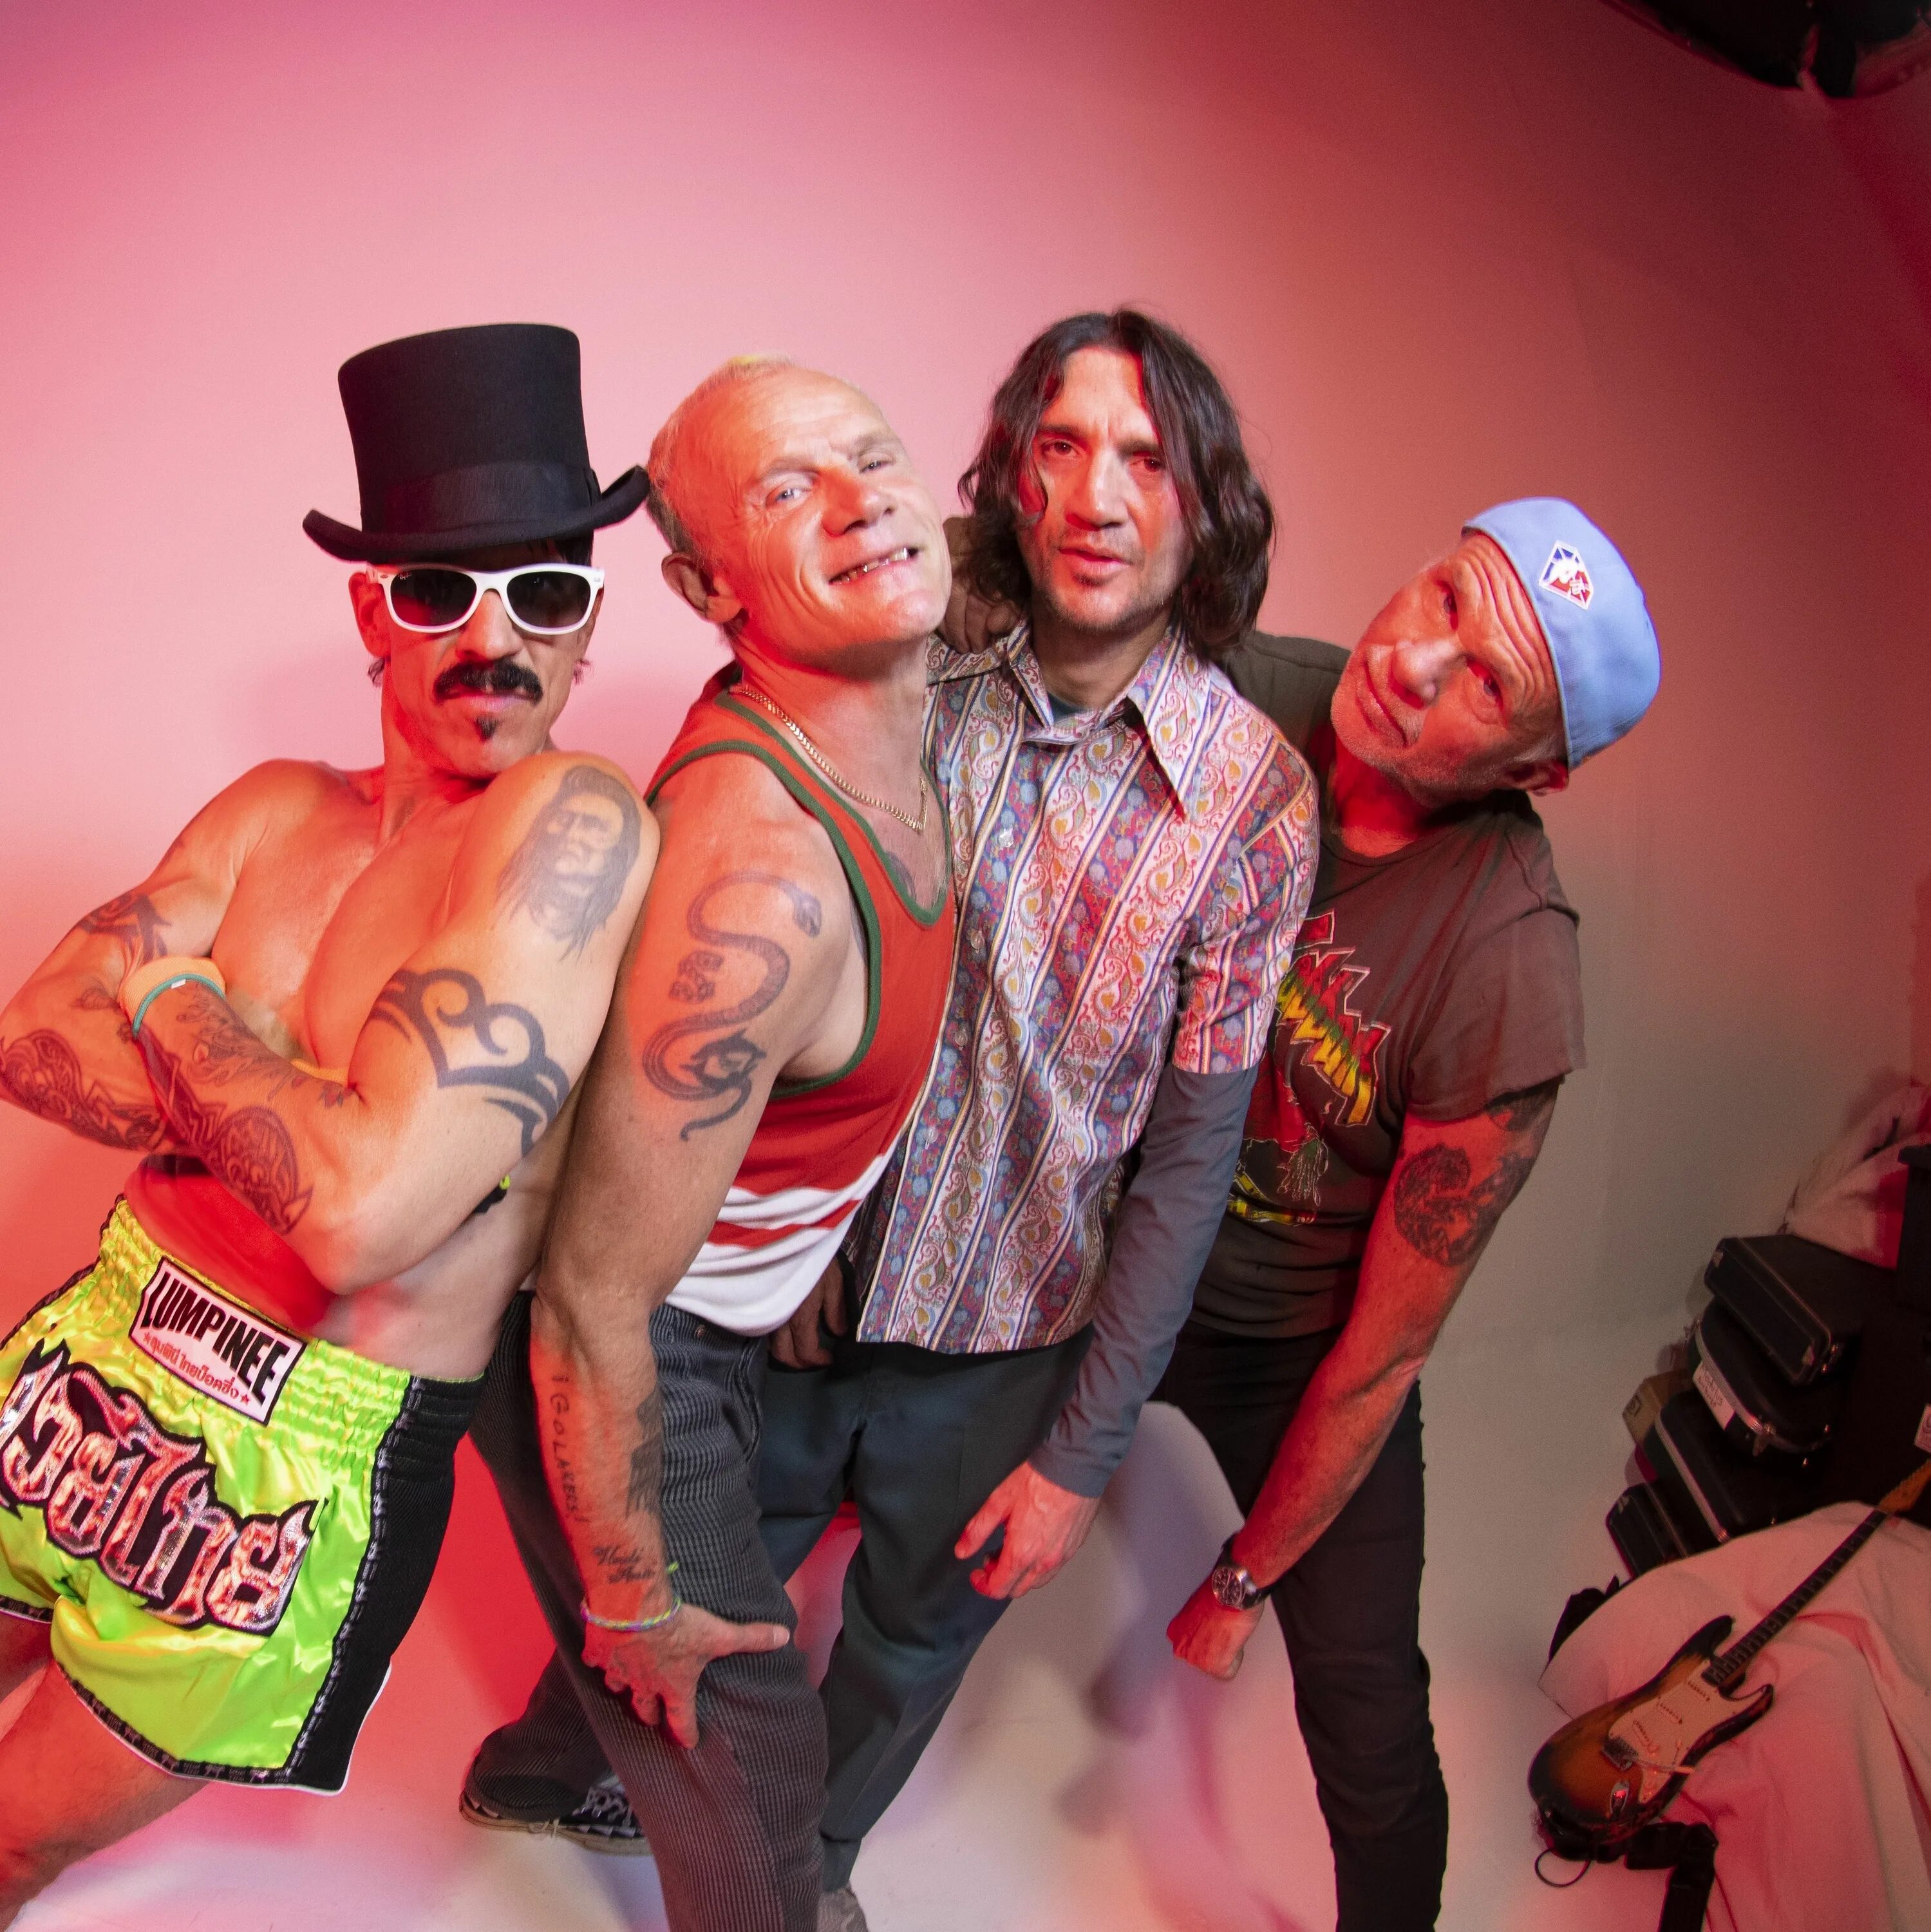 Red pepper клипы. Группа Red hot Chili Peppers. Red hot Chili Peppers 2023. Ред хот Чили Пепперс 2023. Red hot Chili Peppers 2023 на концерте.